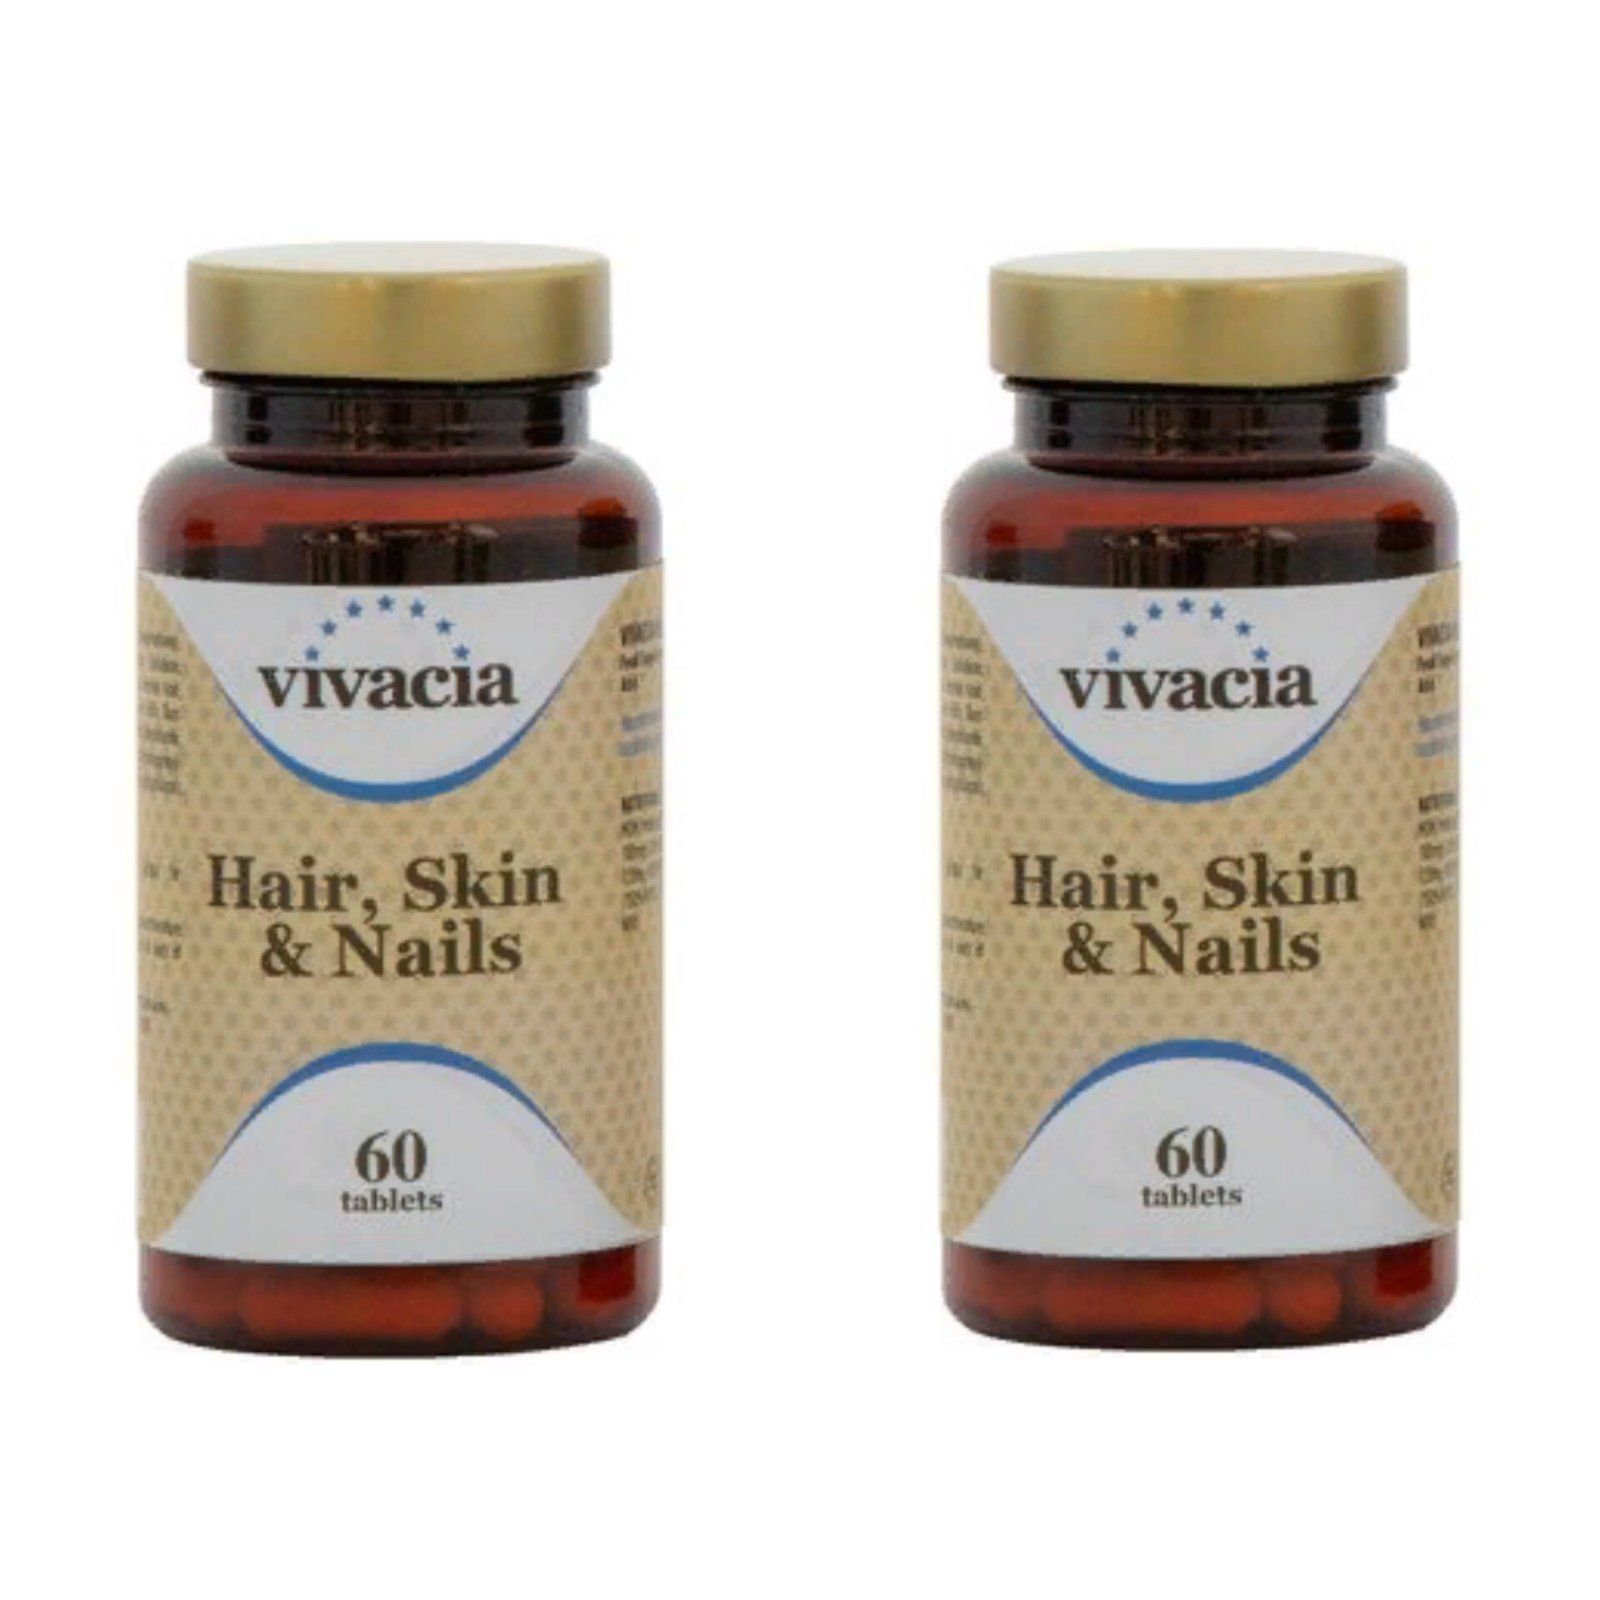 Vivacia vitamin. Vivacia hair, Skin & Nails. Vivacia для волос. Hair Skin Nails витамины. Vivacia витамины.